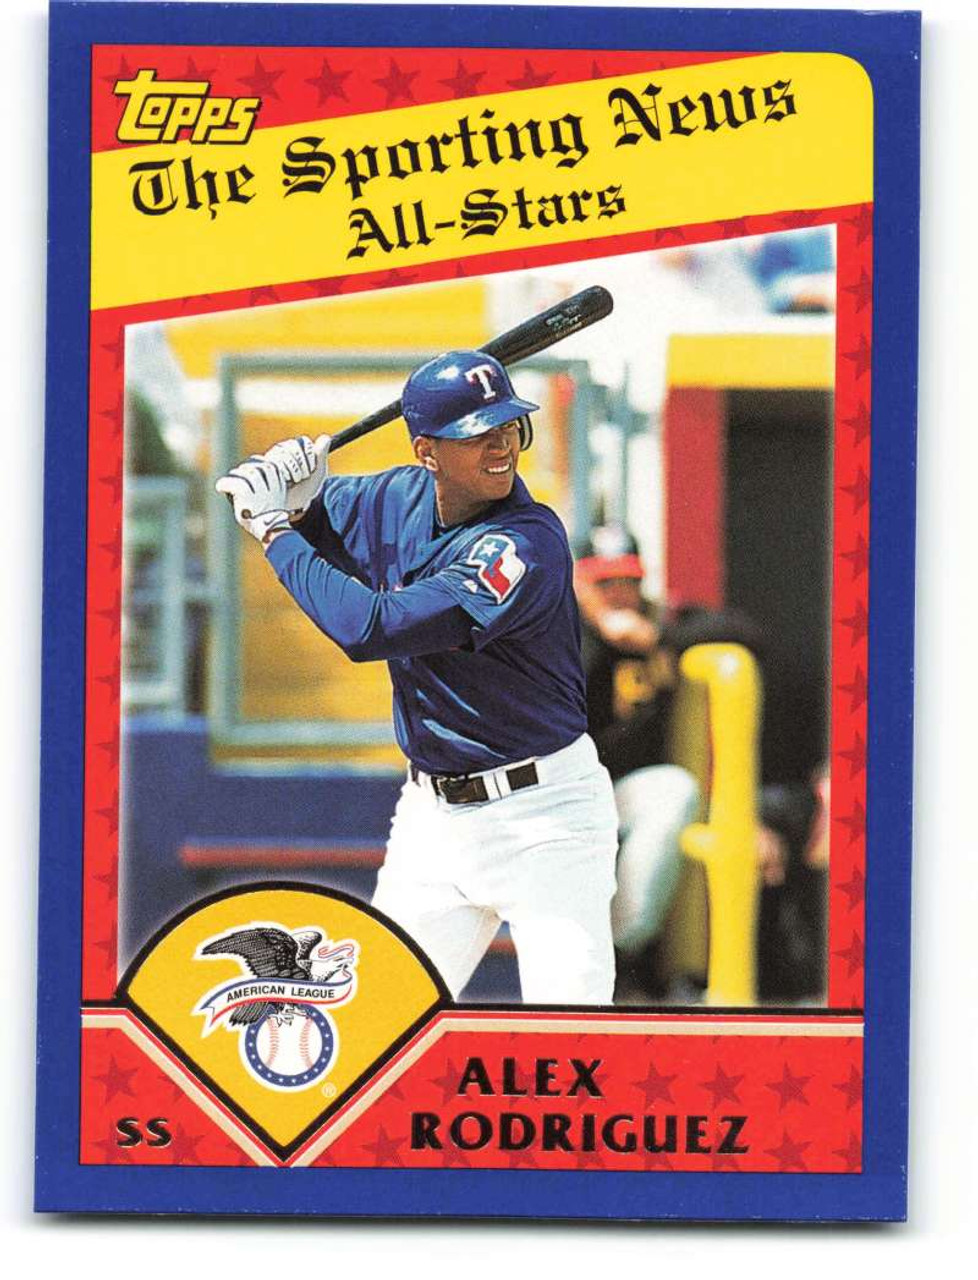 2003 Alex Rodriguez Home Runs Game Worn Texas Rangers Jersey